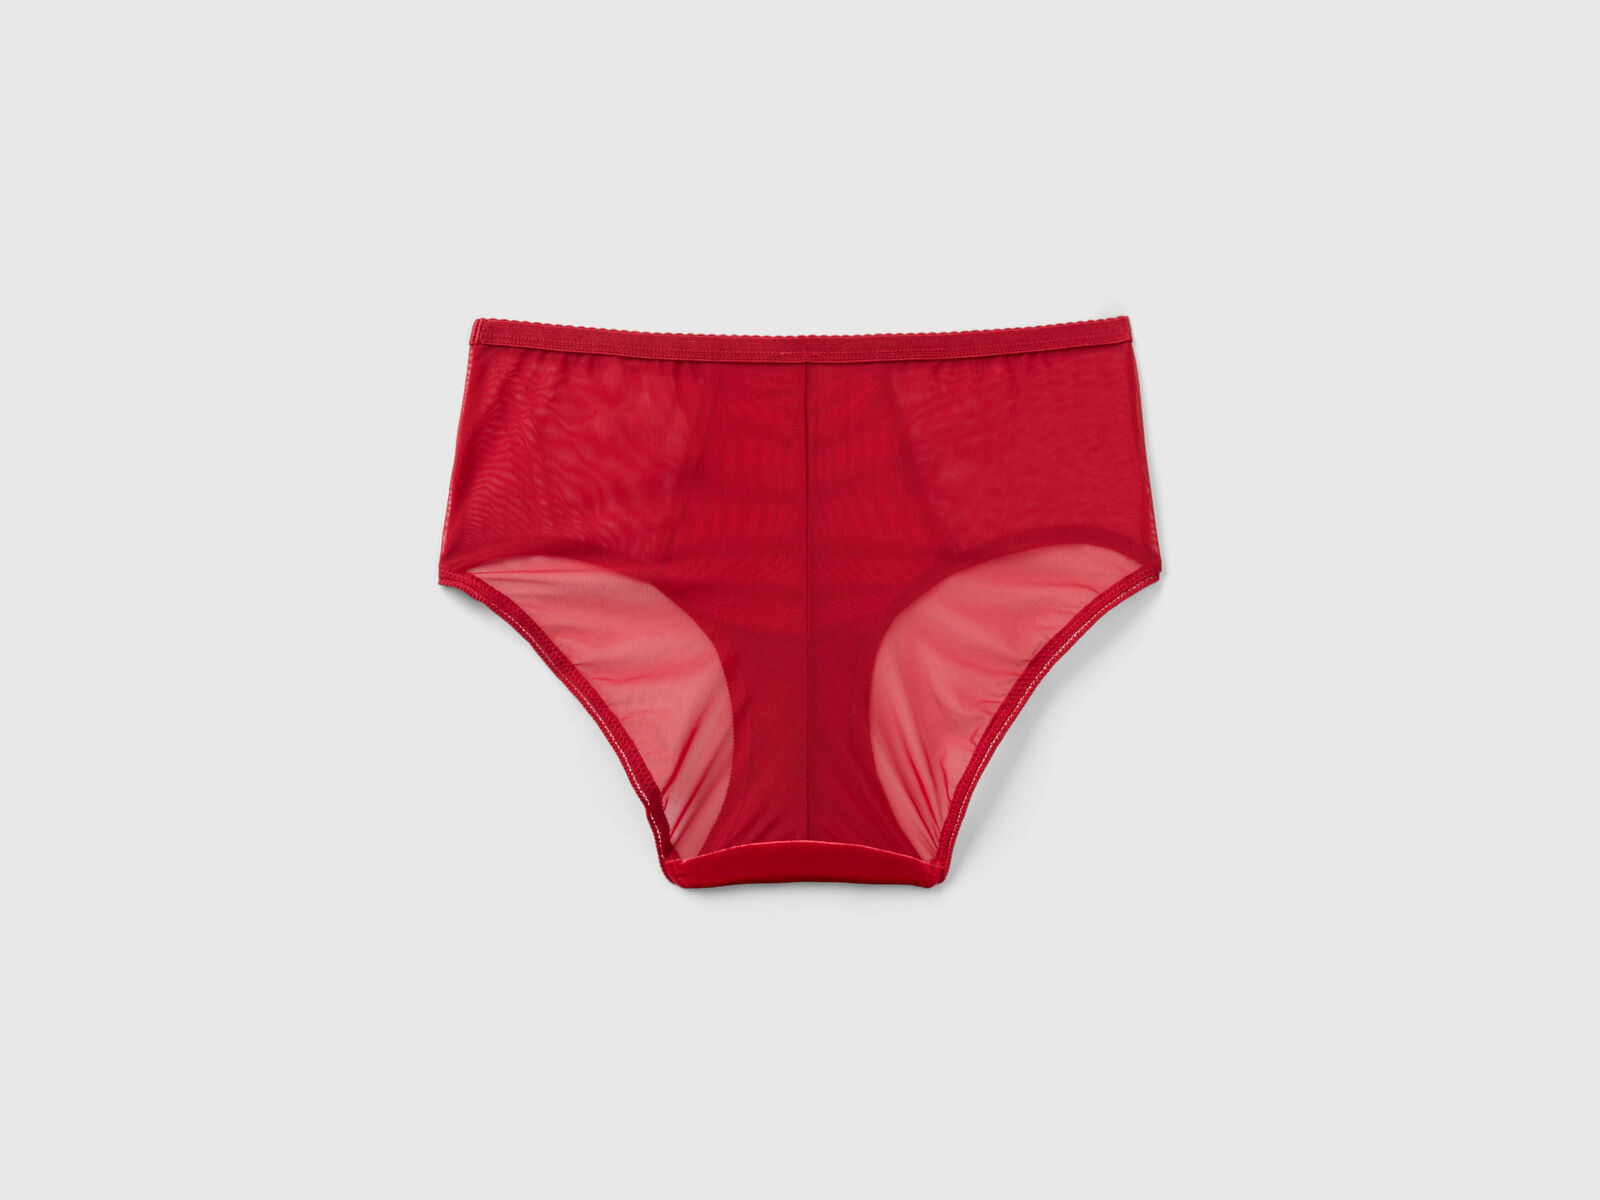 Women's Underwear Undercolors Collection 2024